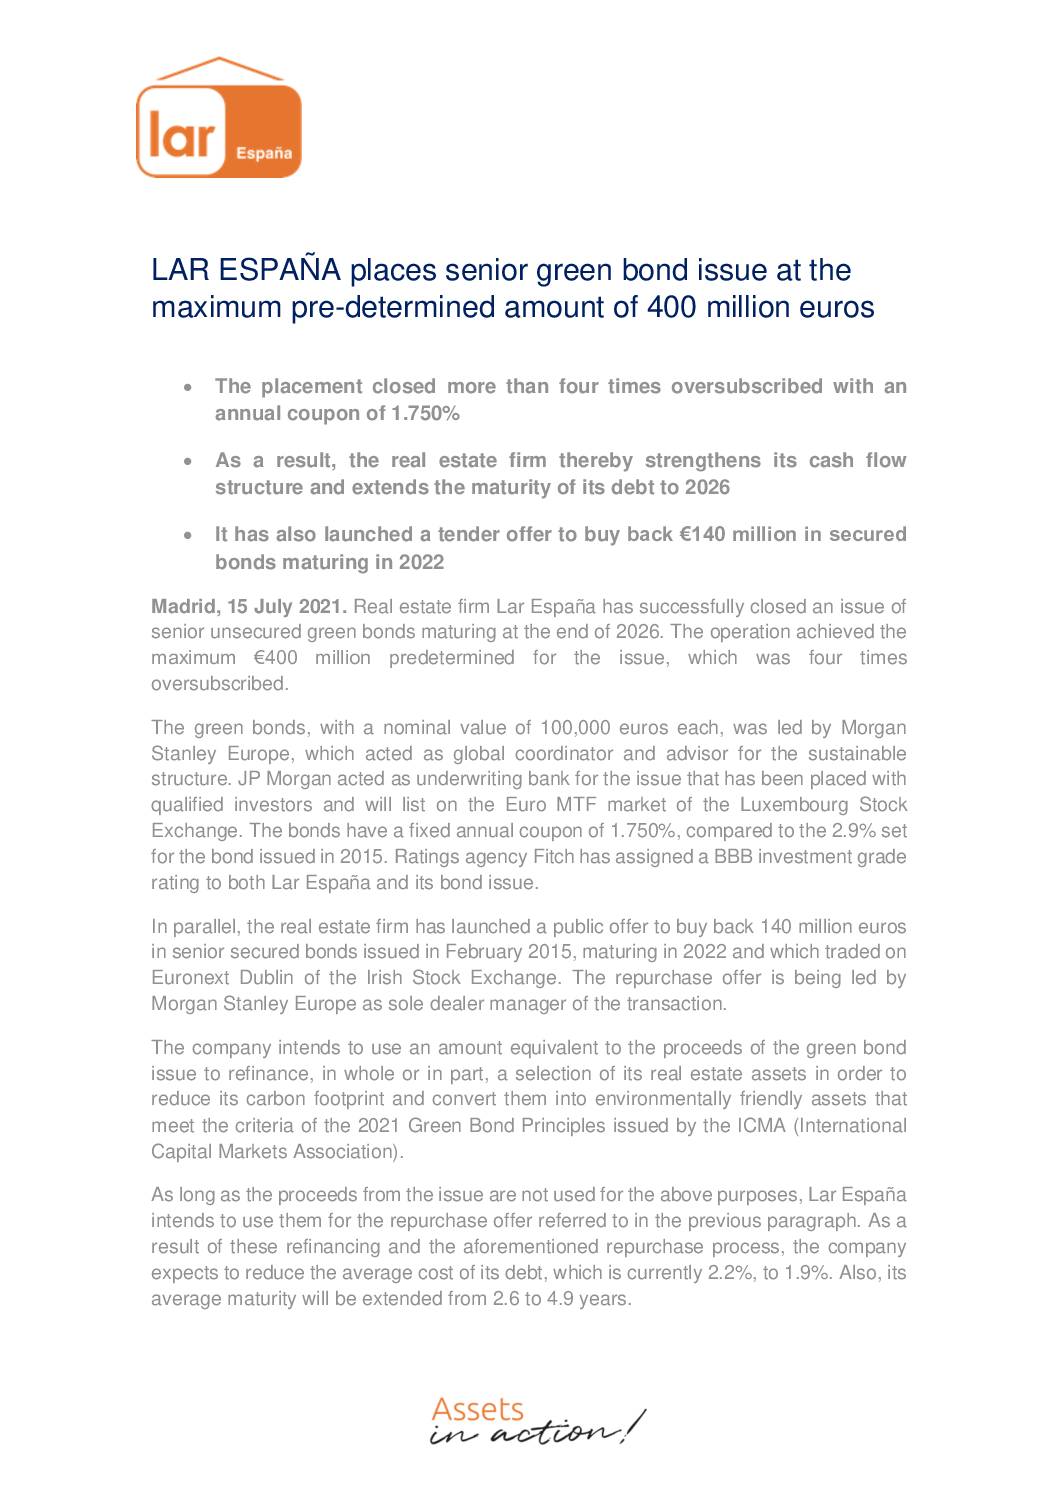 Lar Espana Places Senior Green Bond Issue at the Maximum Pre-Determined Amount of €400mn